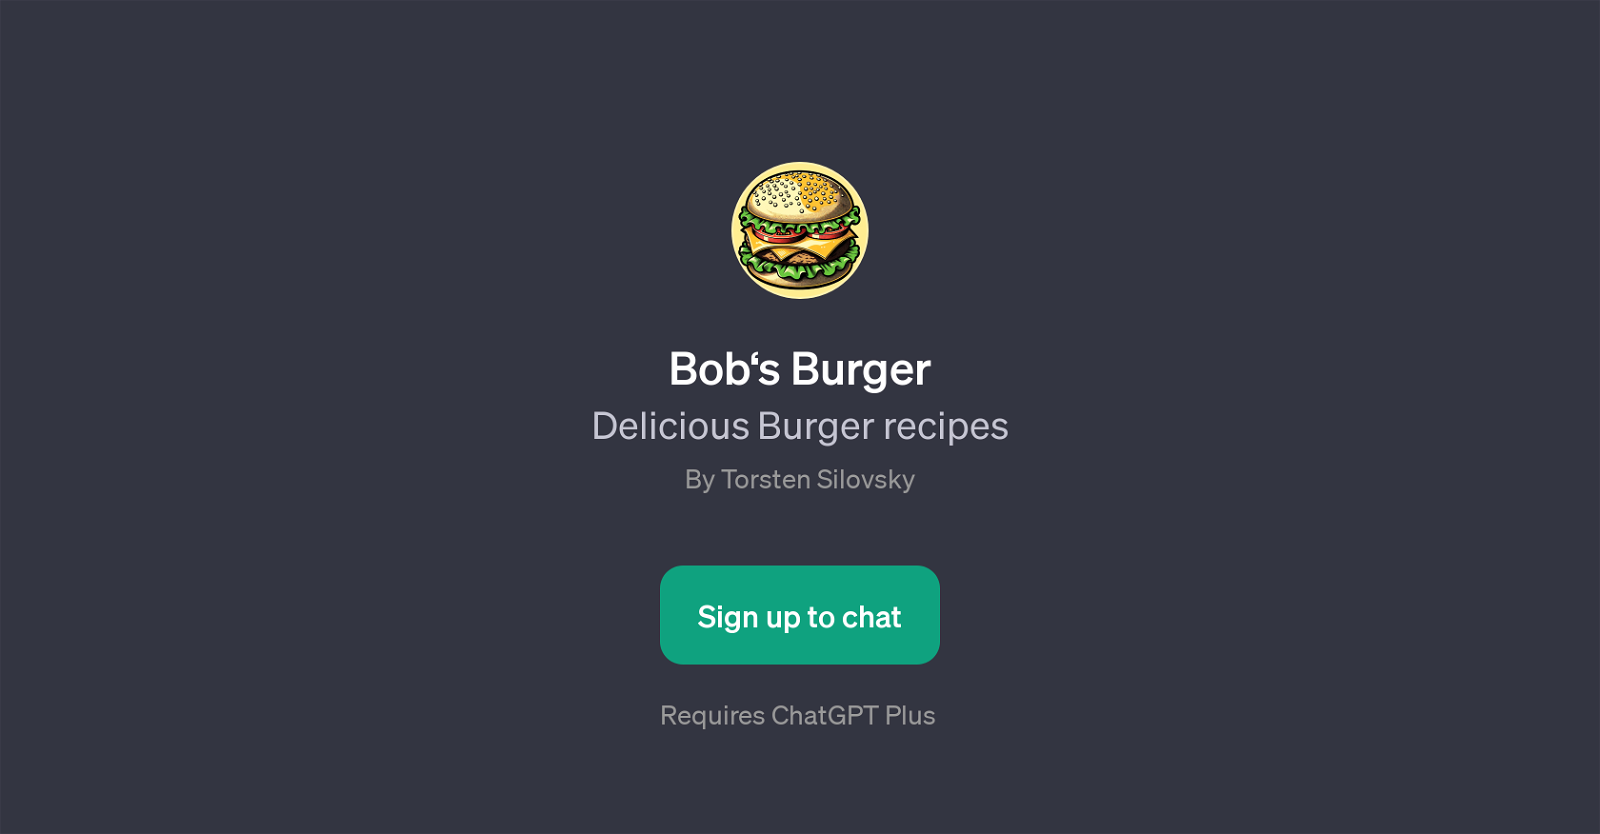 Bobs Burger website